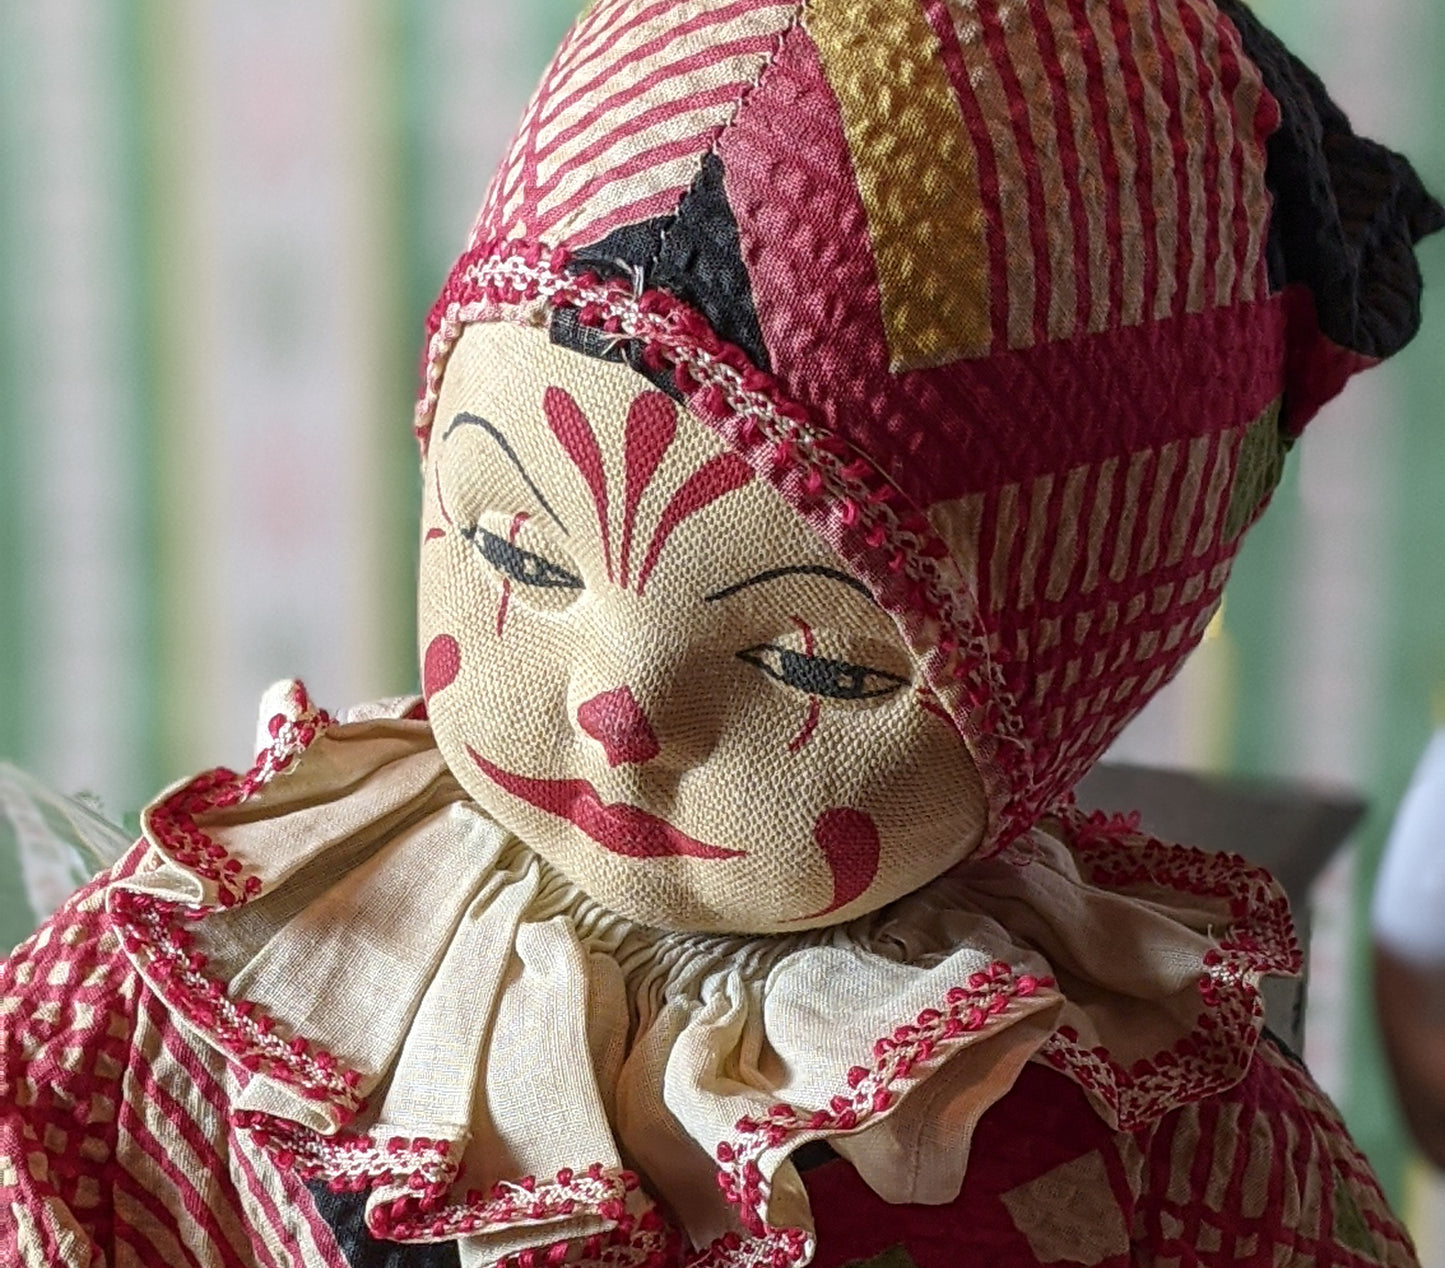 Vintage cloth clown doll